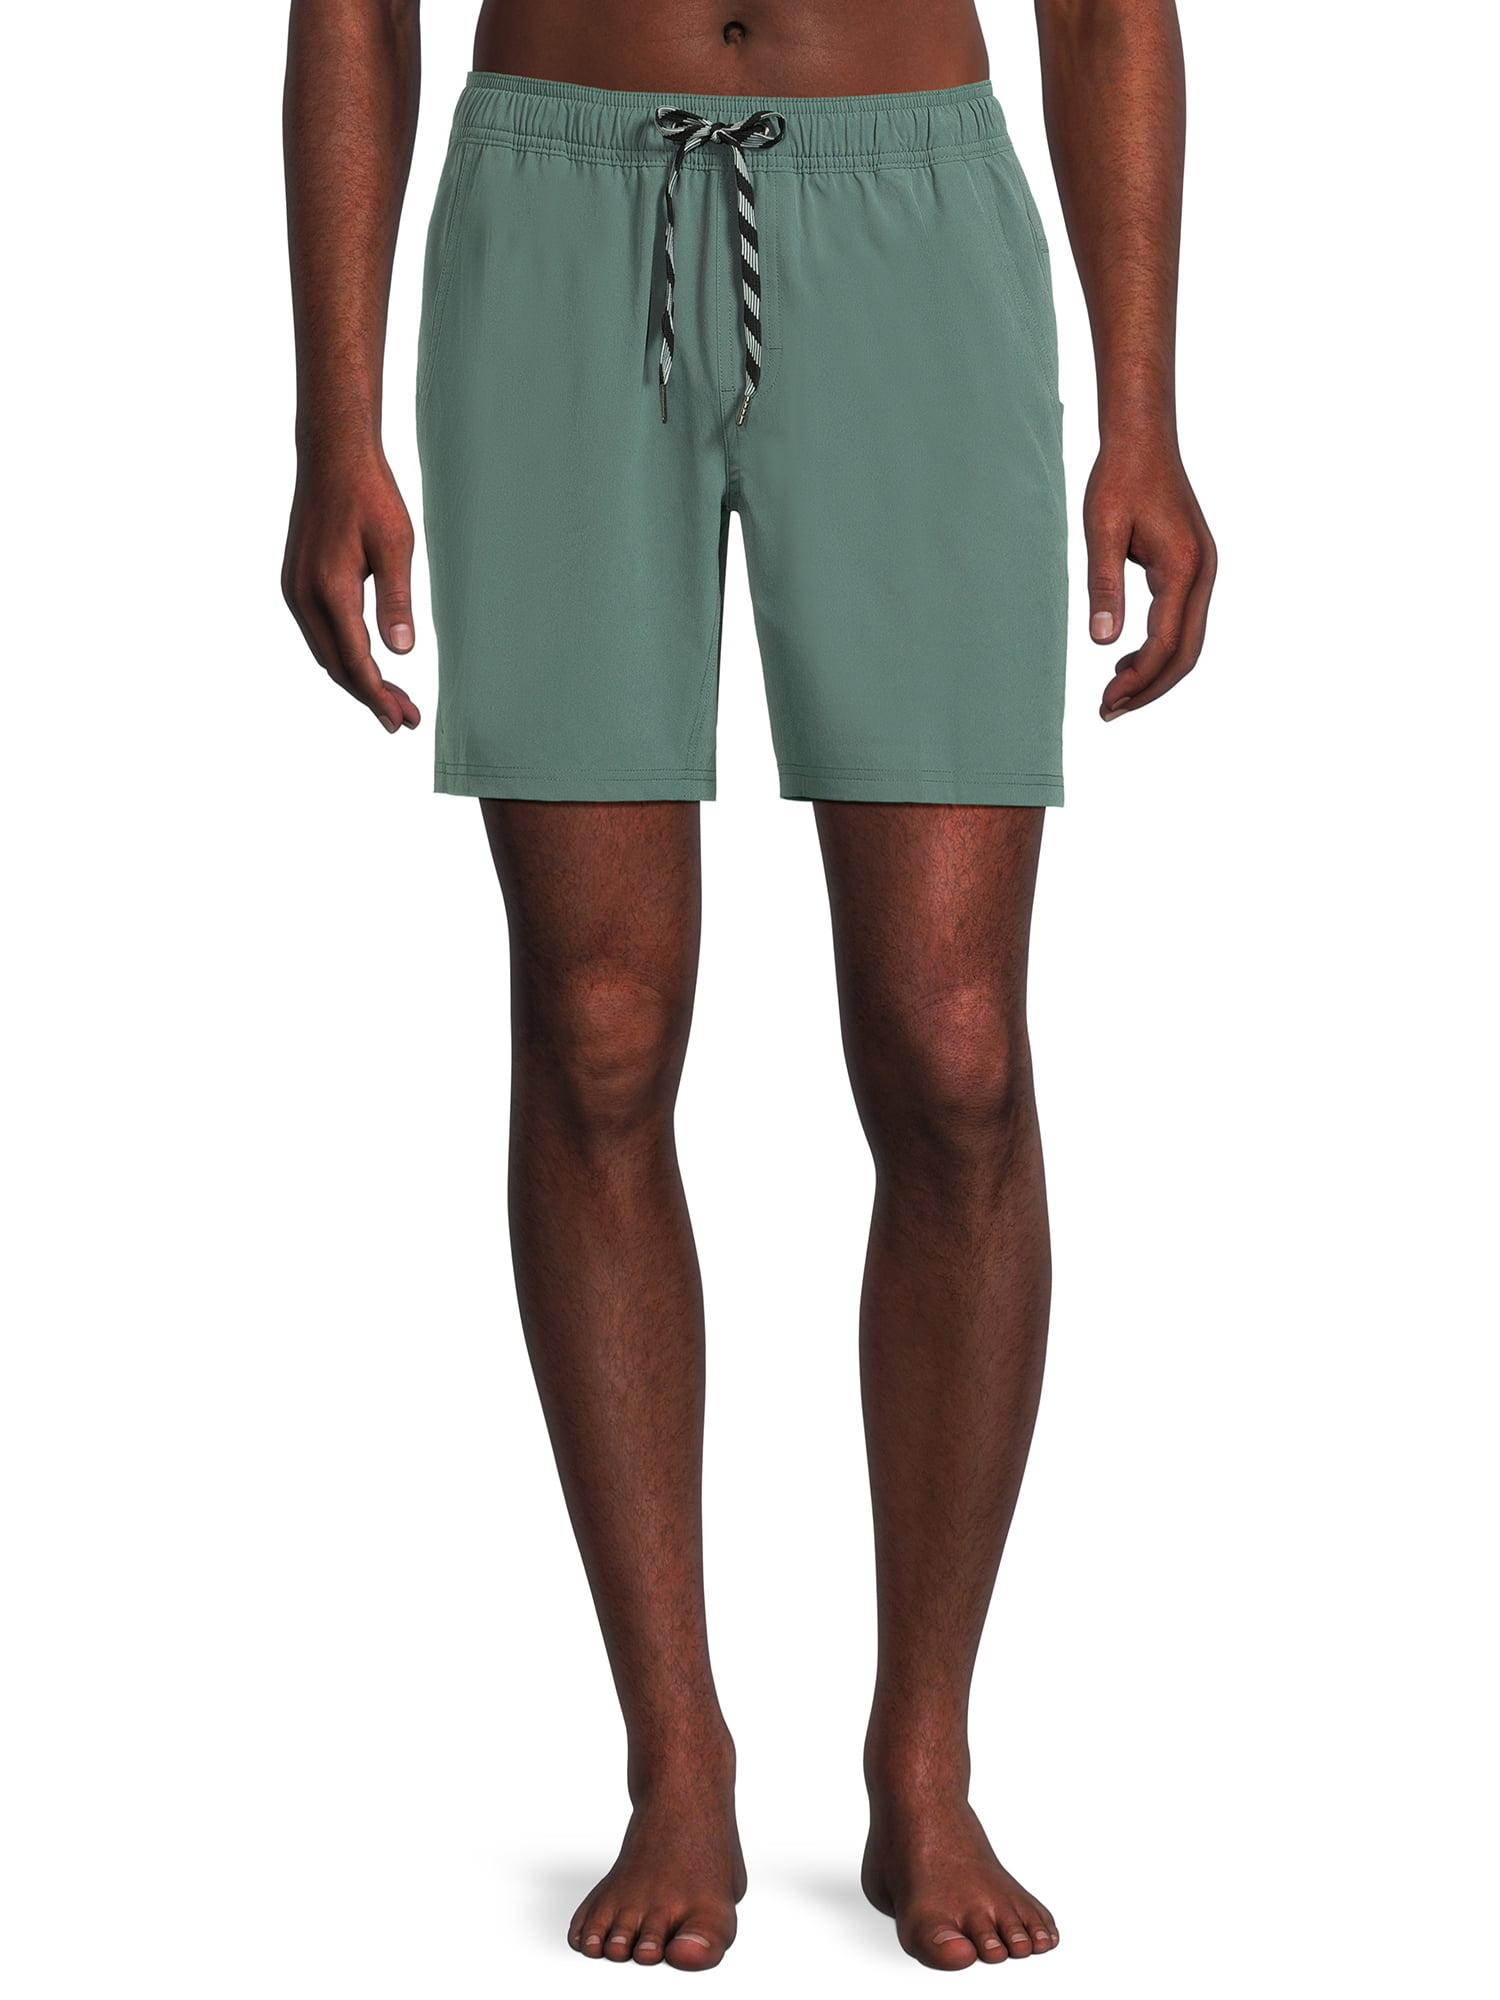 George Men's Athletic Jammer Swim Shorts, Sizes S-3XL - Walmart.com